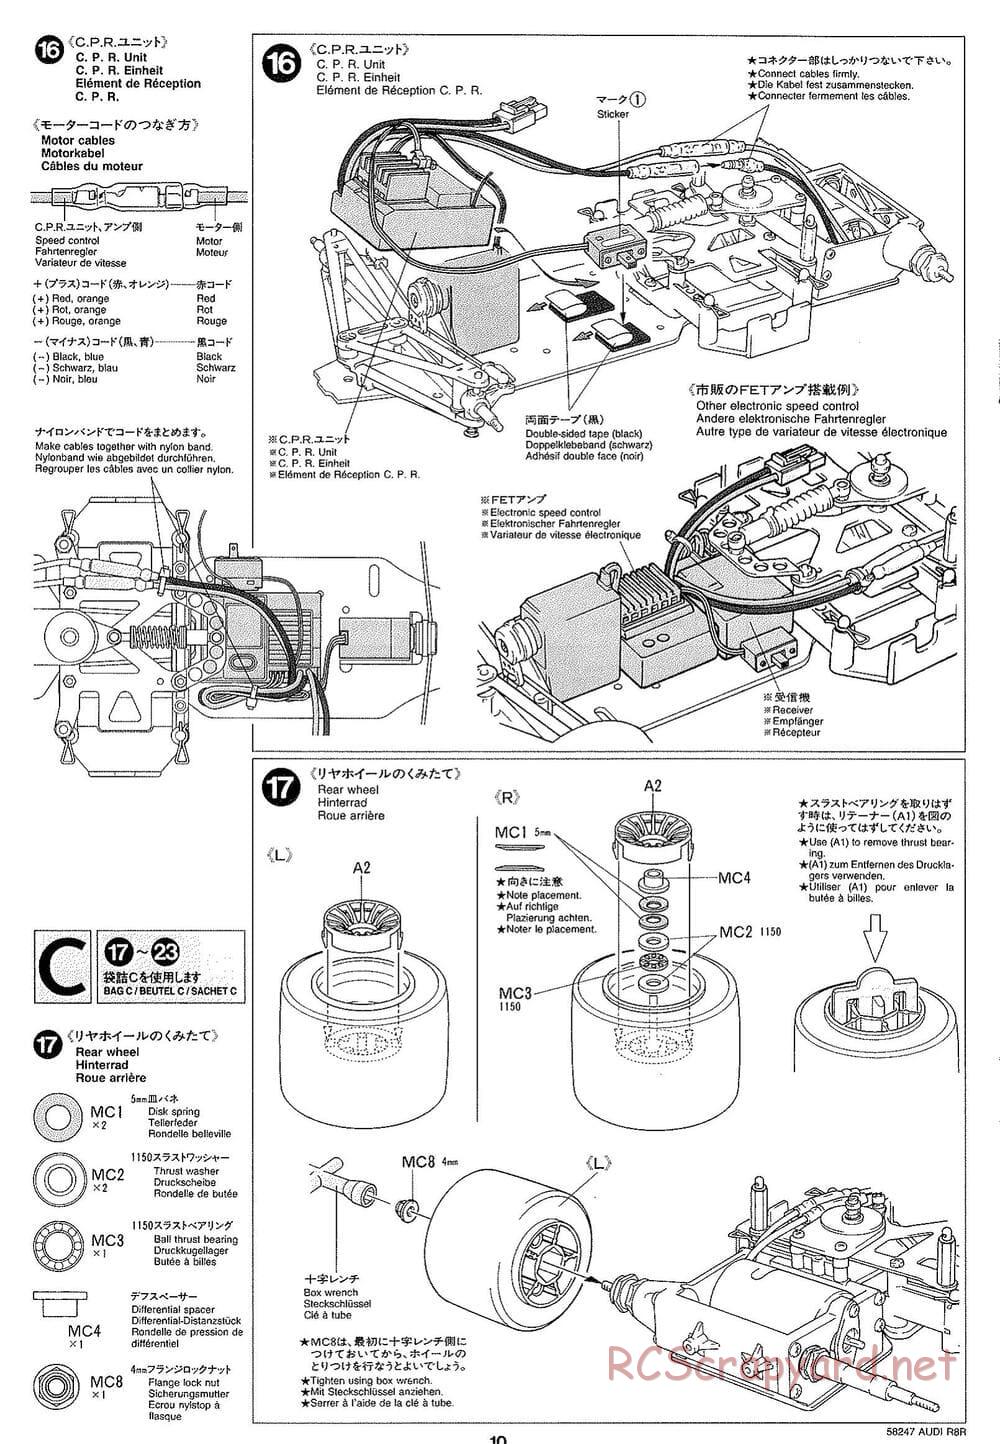 Tamiya - Audi R8R - F103LM Chassis - Manual - Page 10